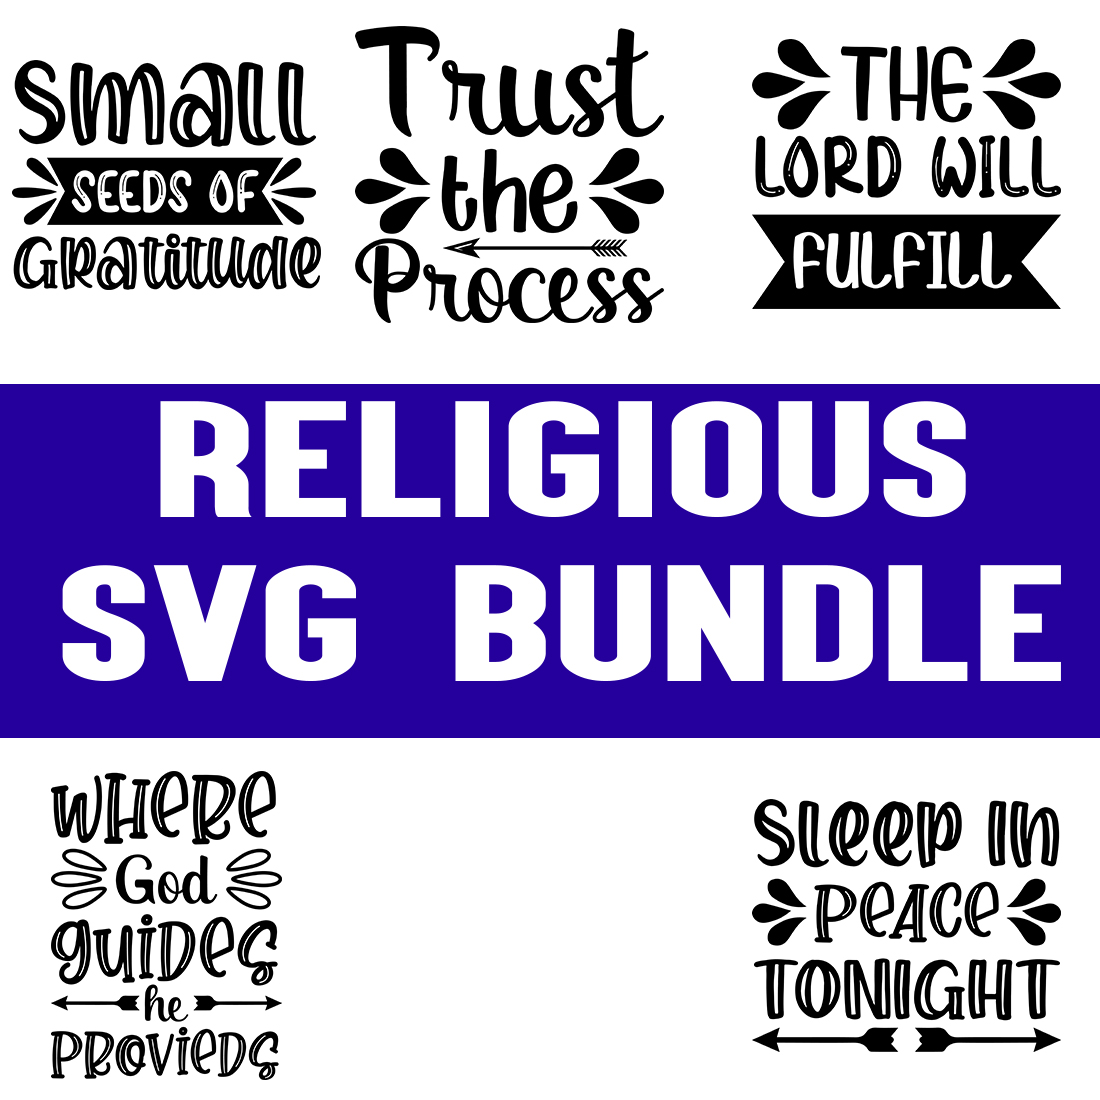 Religious svg Bundle cover image.